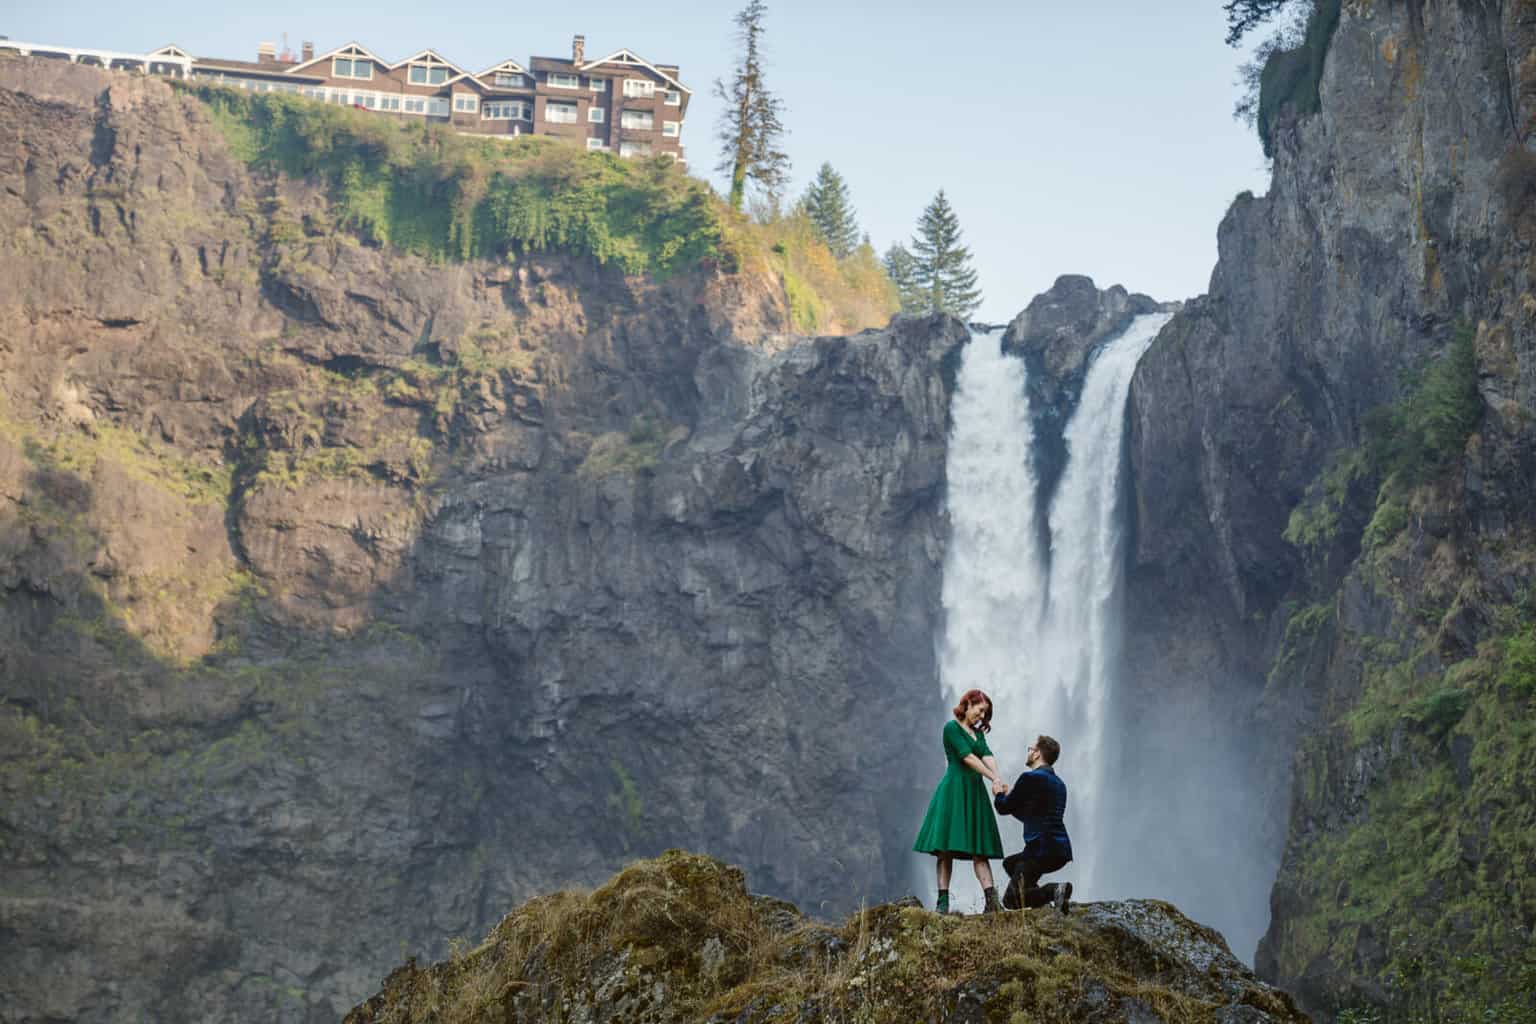 Man proposes to woman at Snoqualmie Falls near Salish Lodge